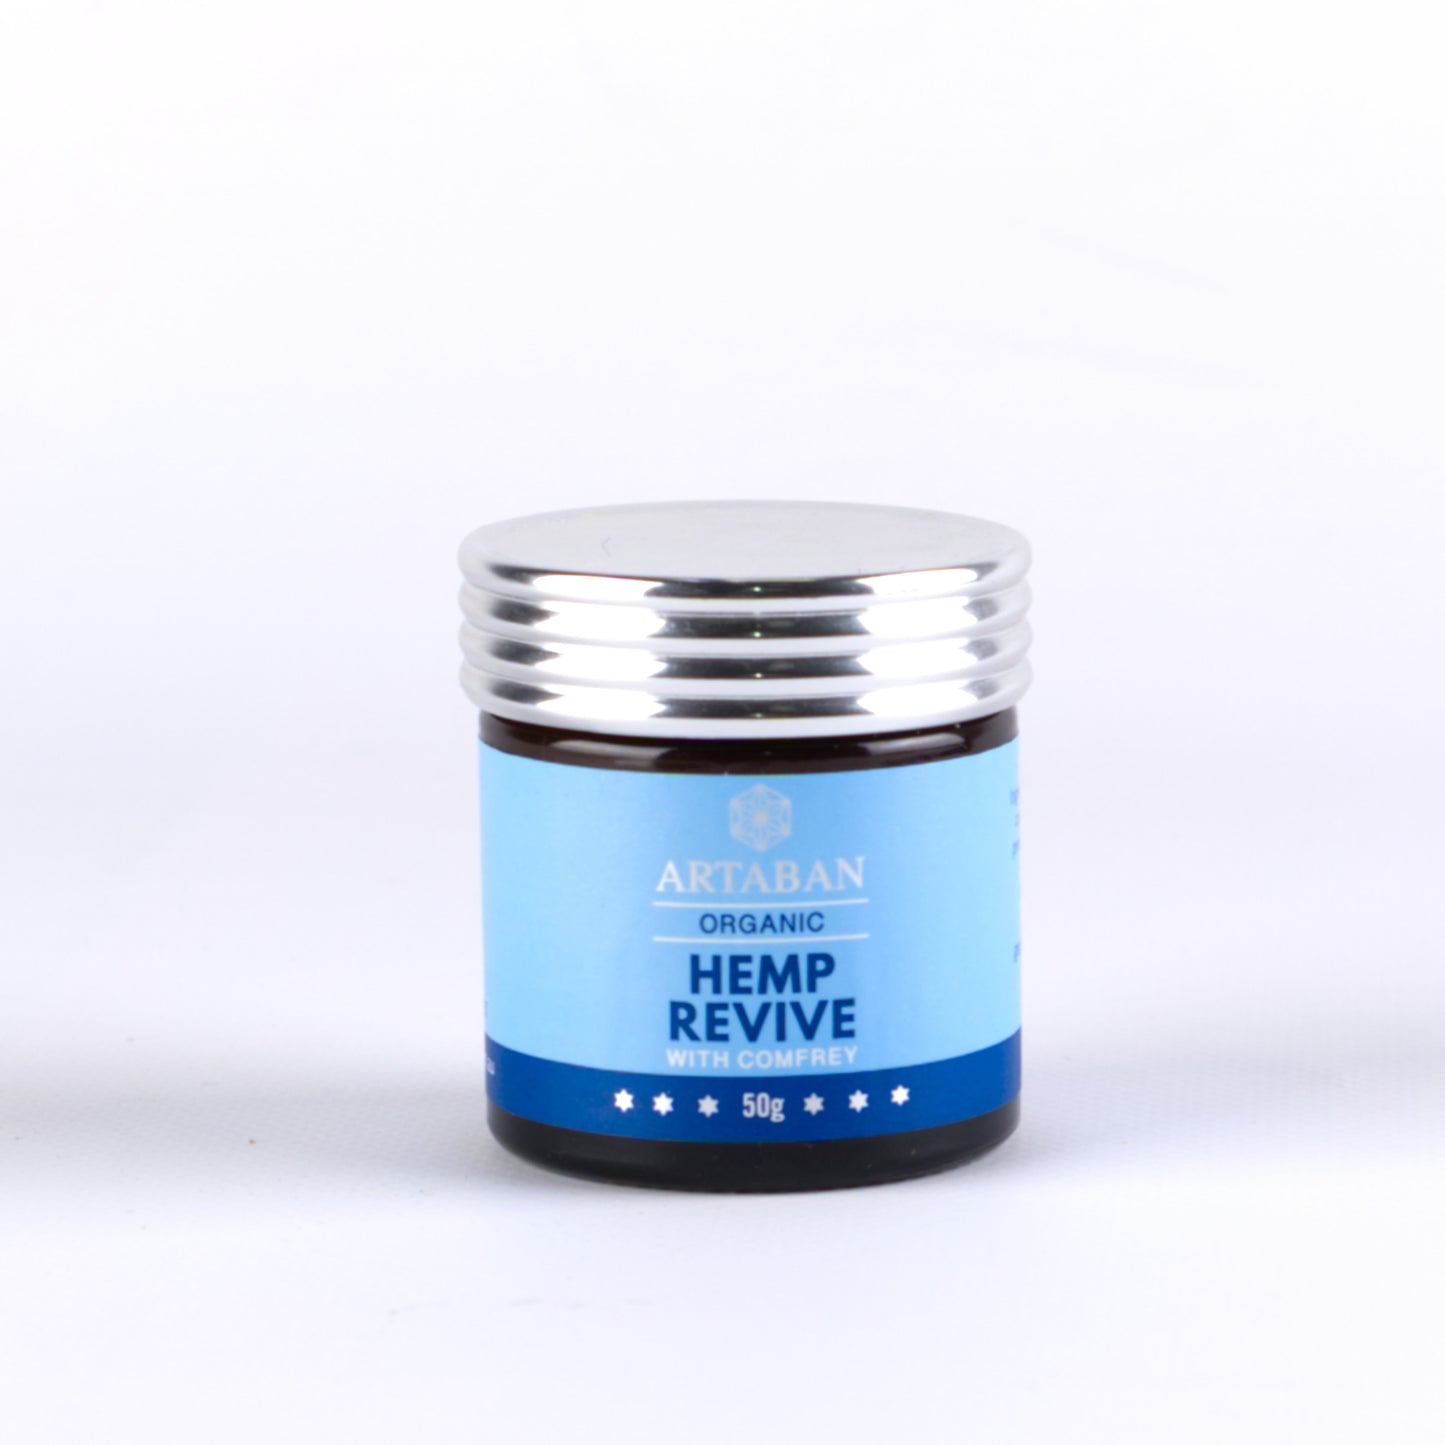 ARTABAN Hemp Cream - Revive Cream with Comfrey